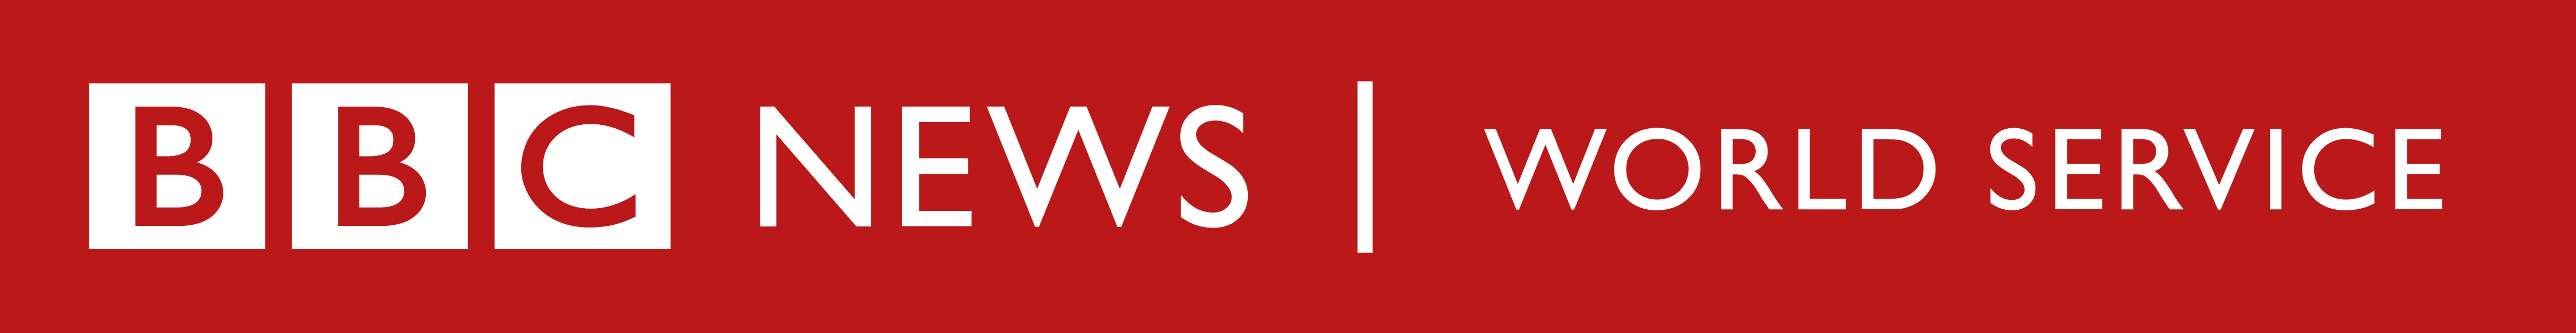 BBC Logo, Red banner